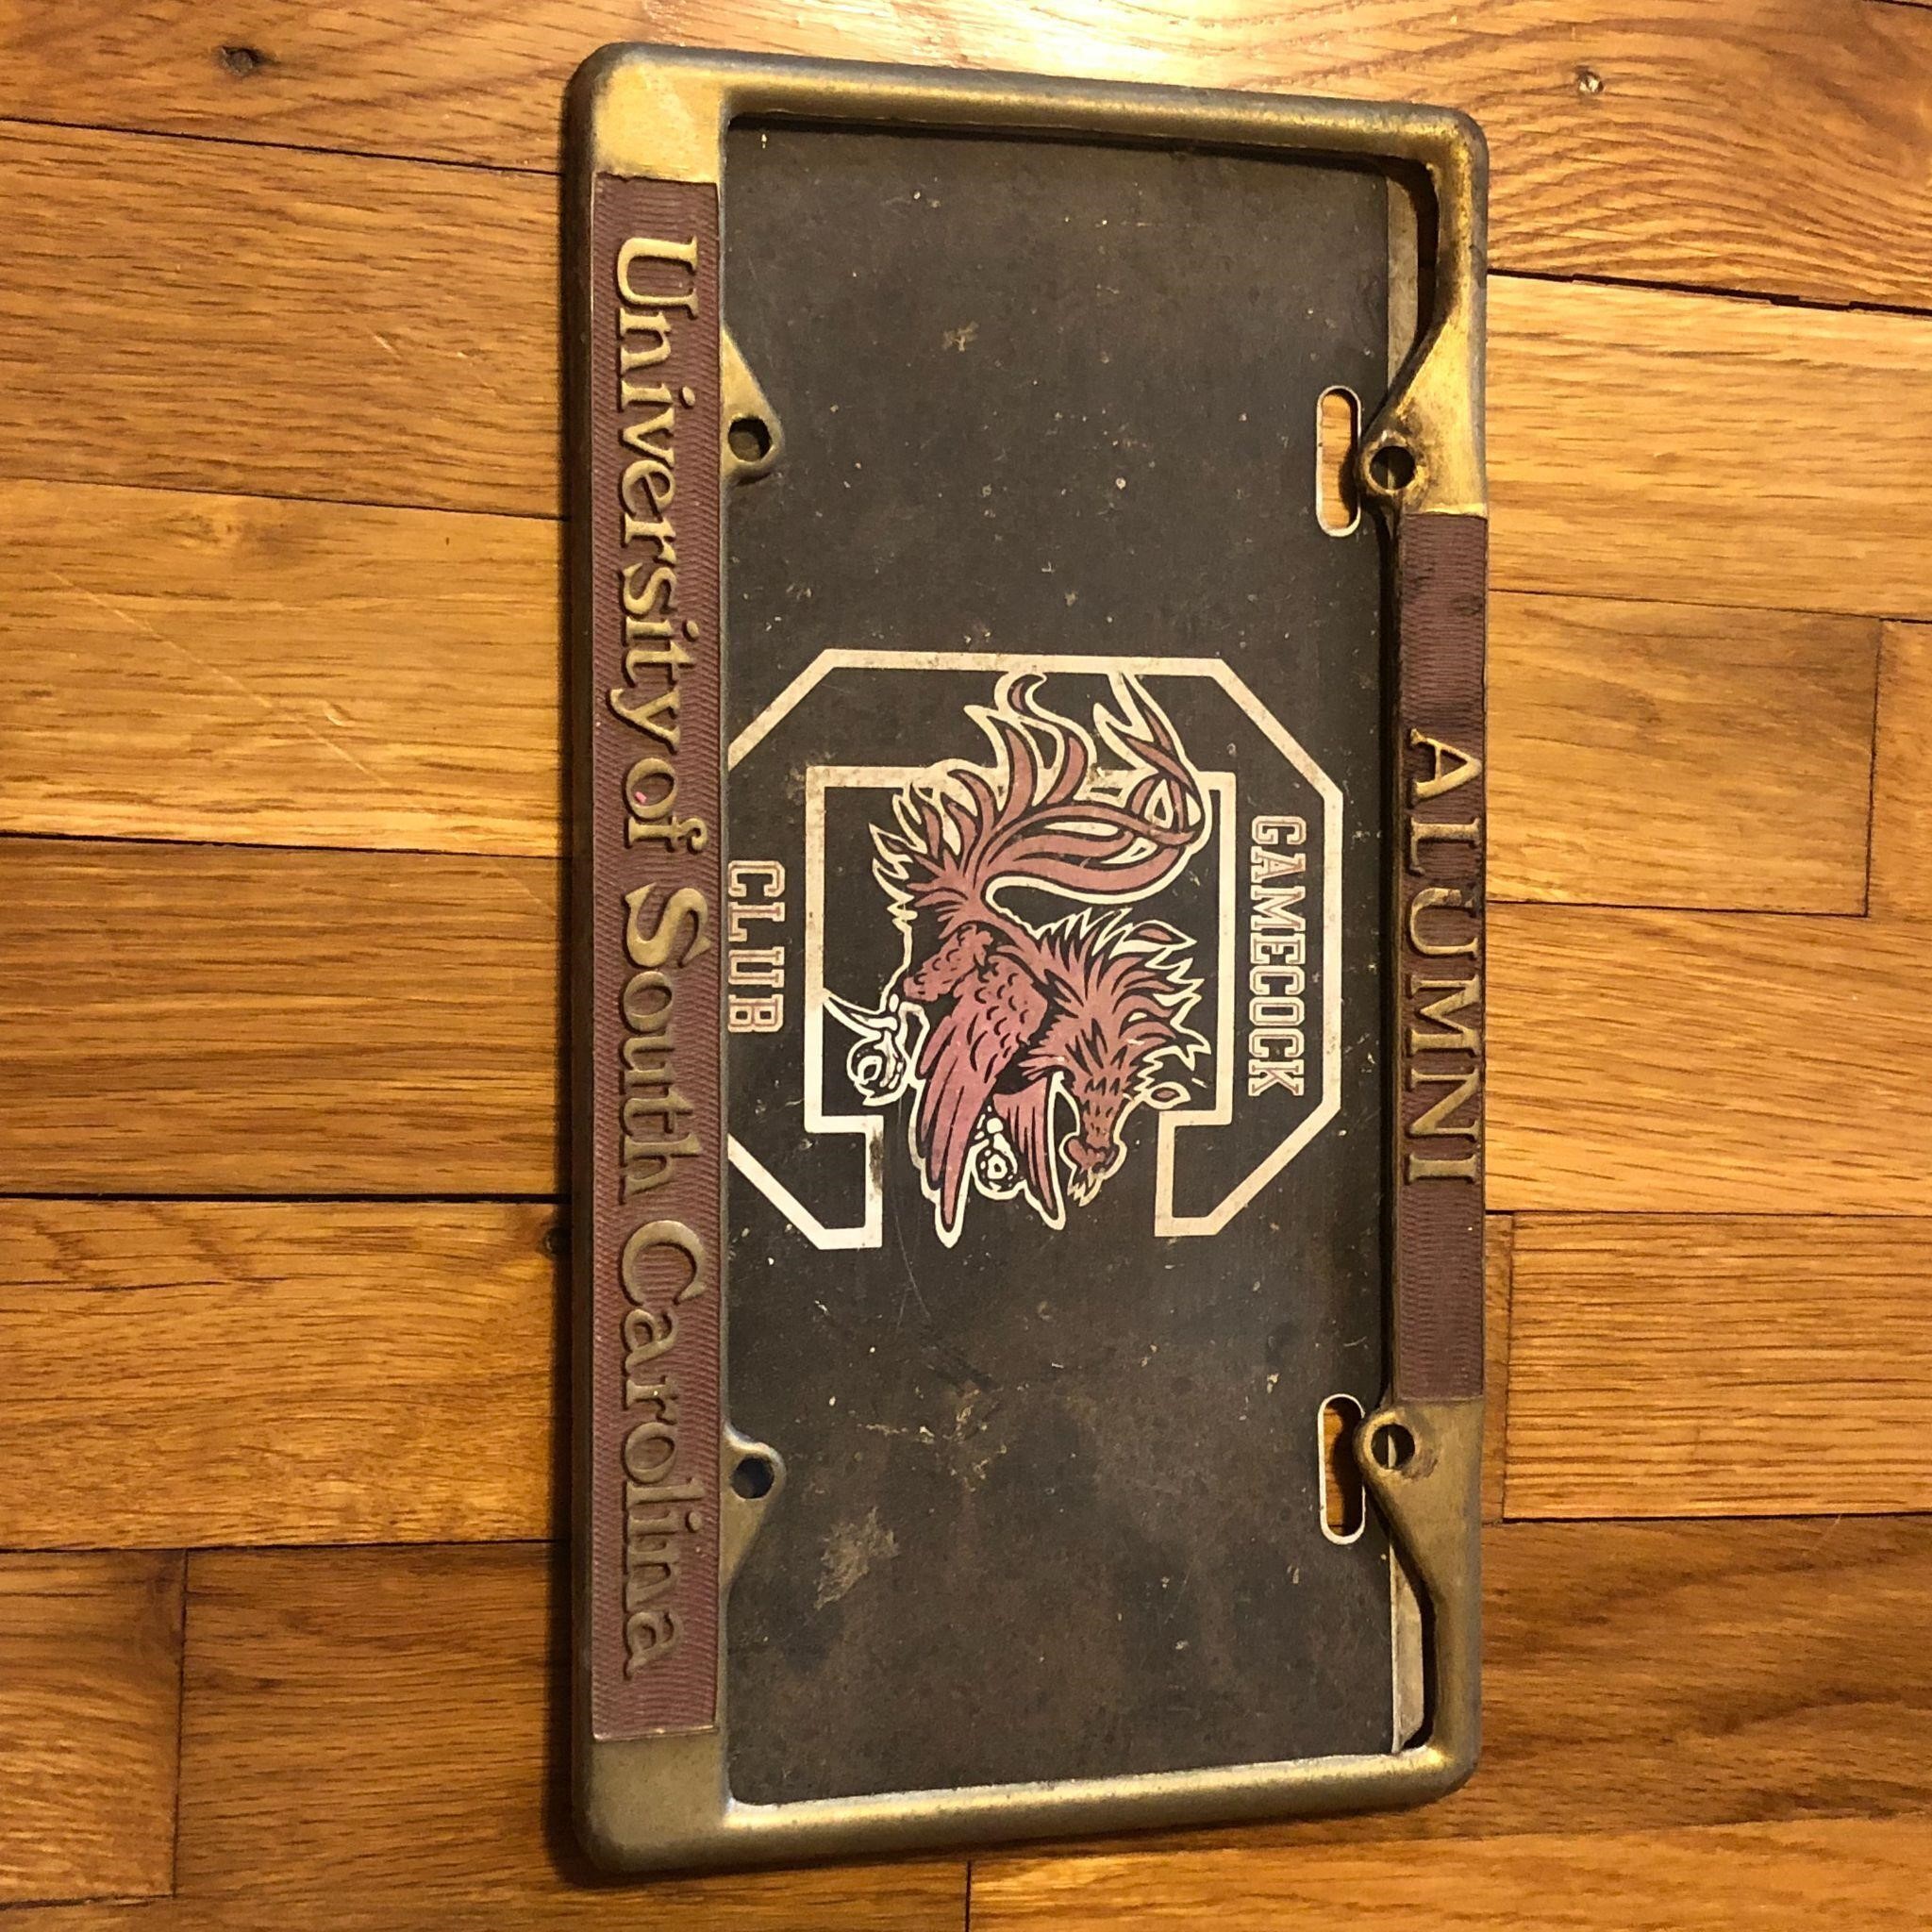 University South Carolina Gamecock License Plate